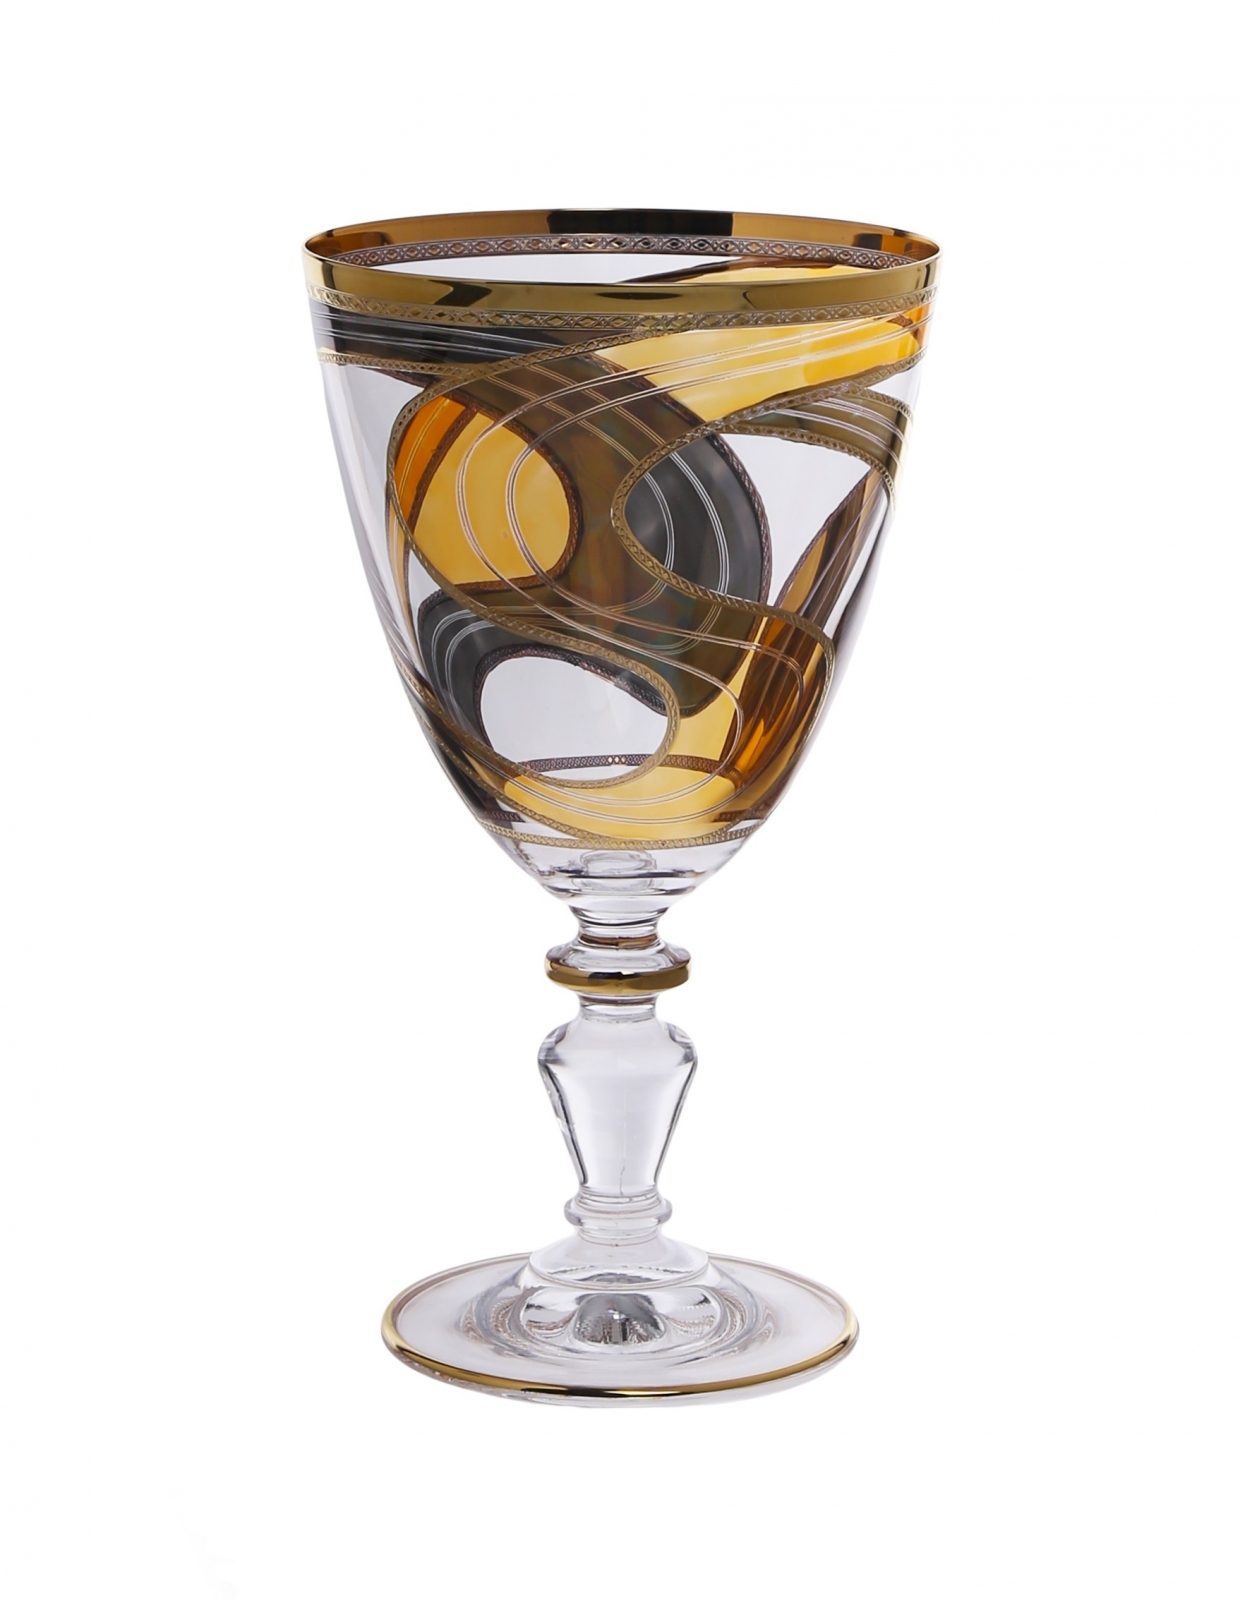 https://file.1001shops.com/MuranoGlassGifts/world-art-glass_Glass-Goblets_Set-Of-6-Water-Glasses-With-24k-Gold-Swivel-Design-5e4c34167299c.jpg